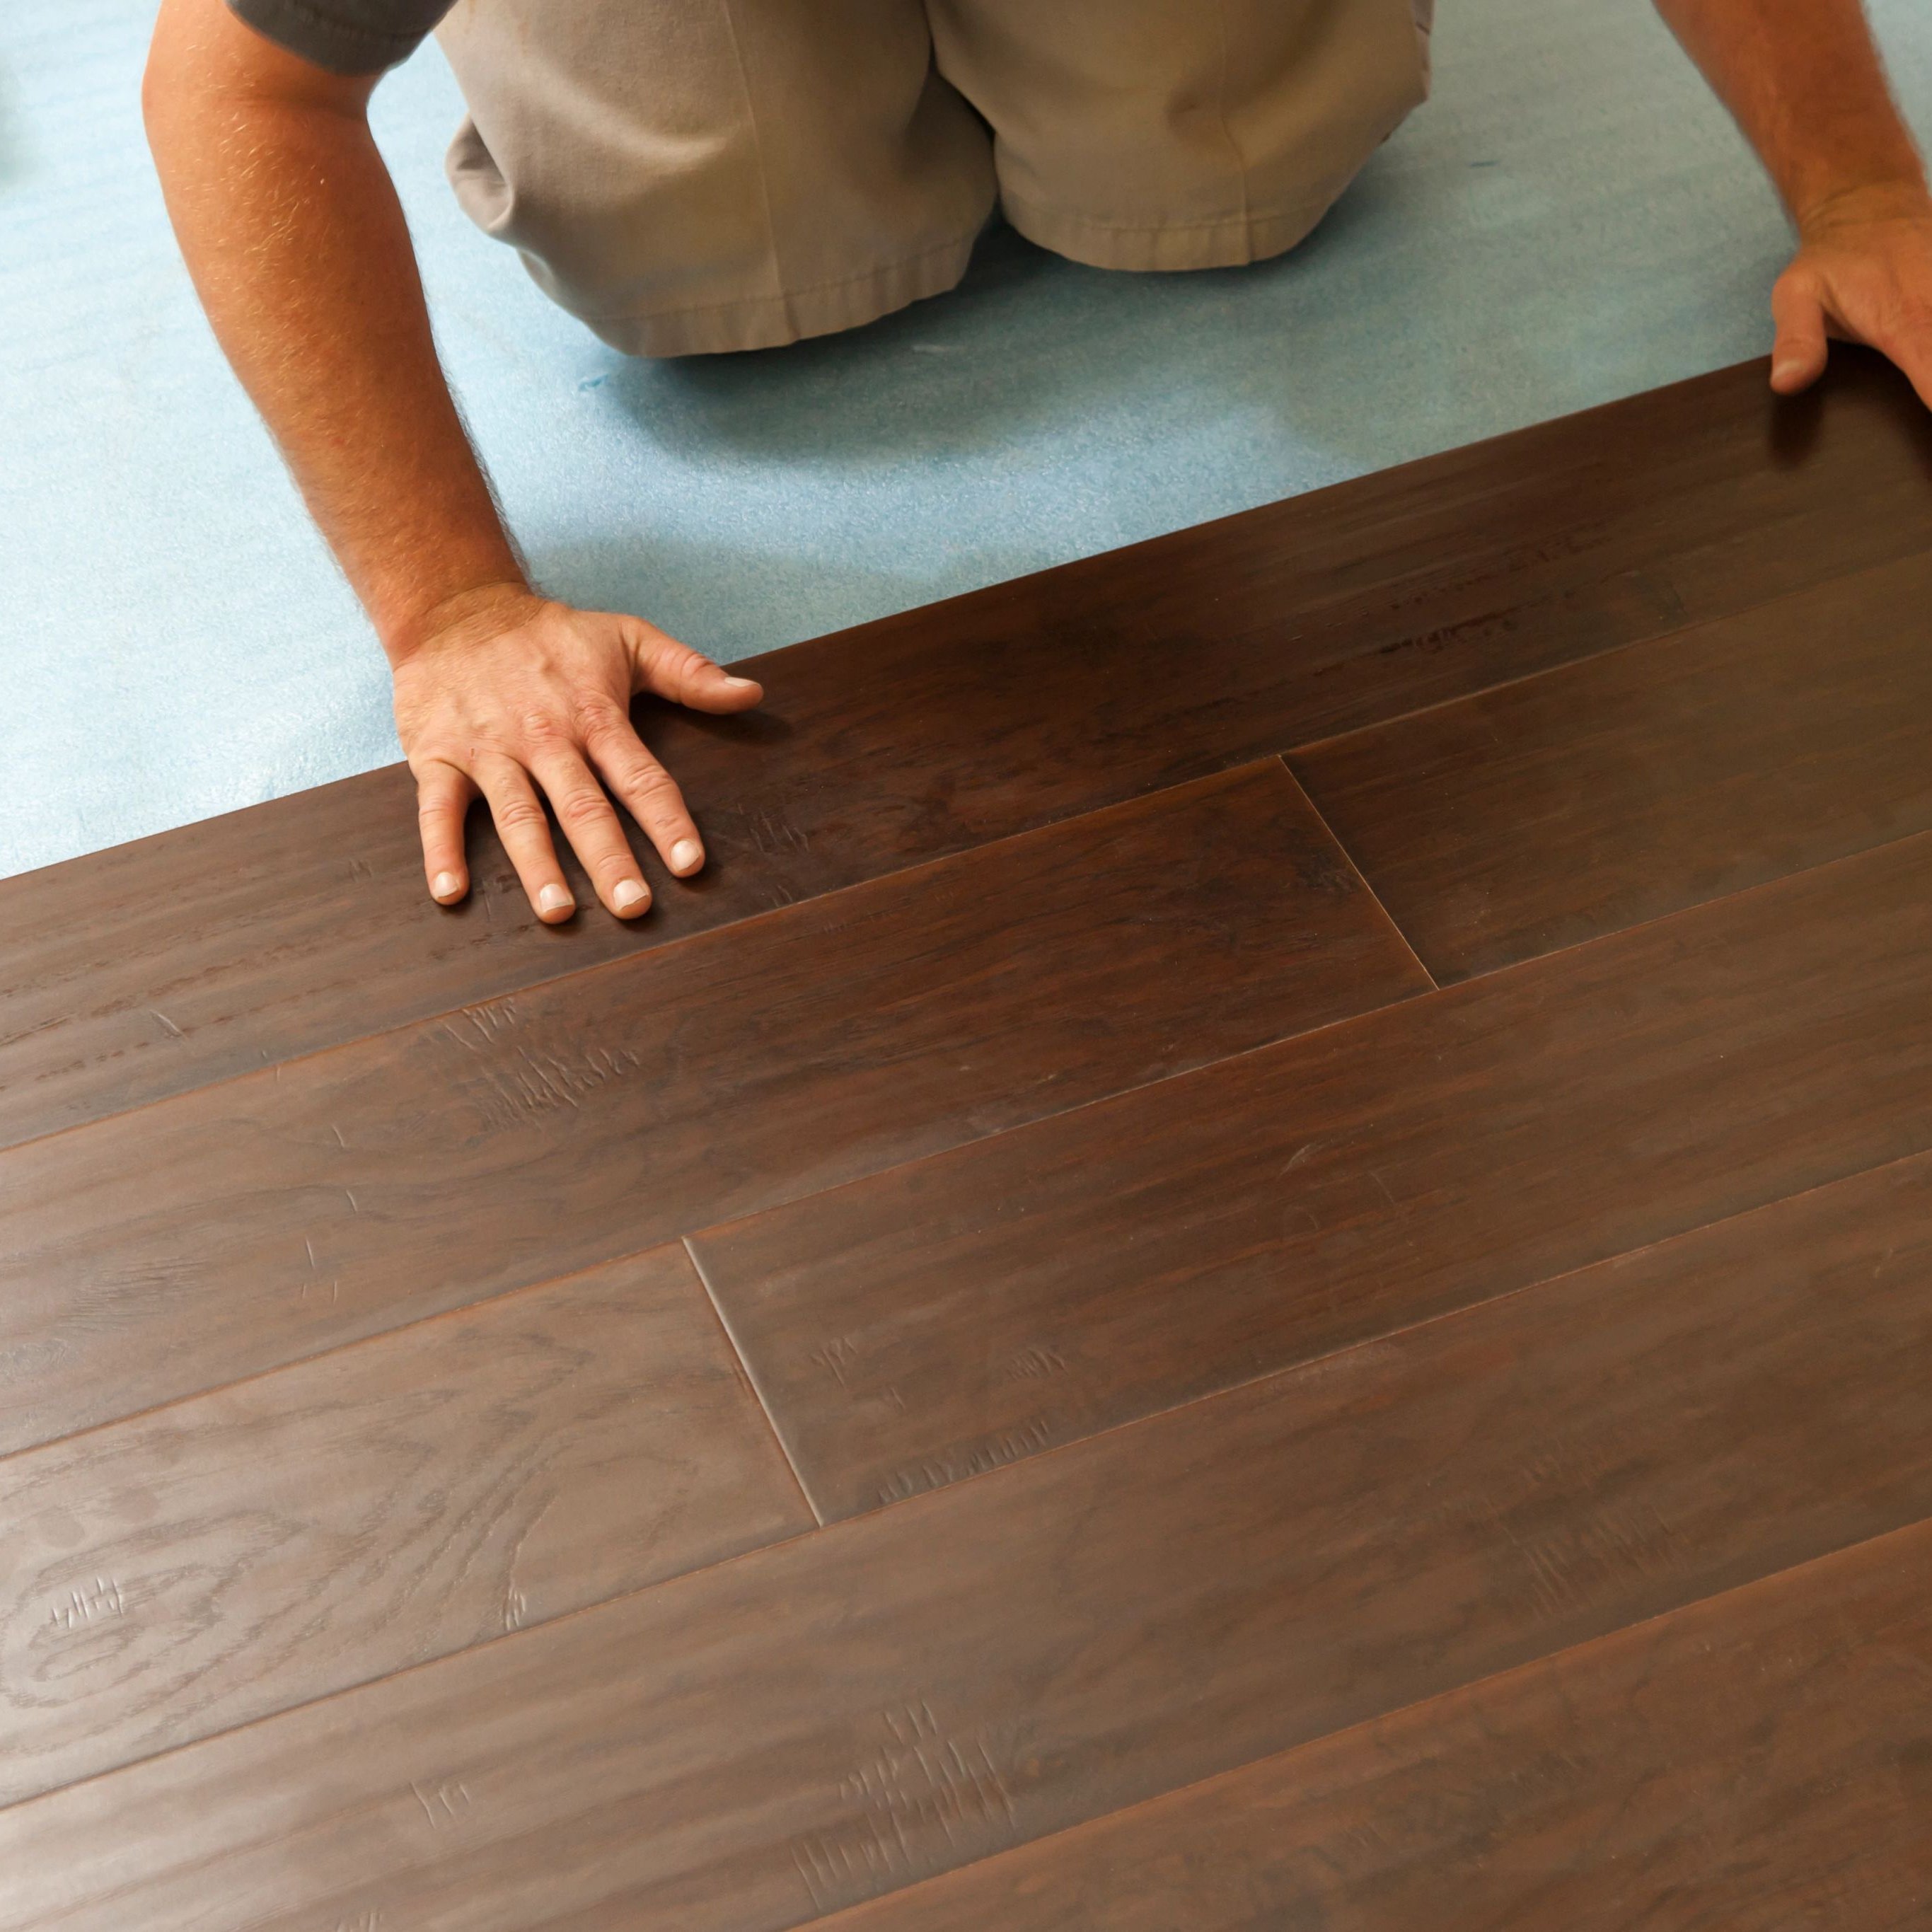 Man installing floor